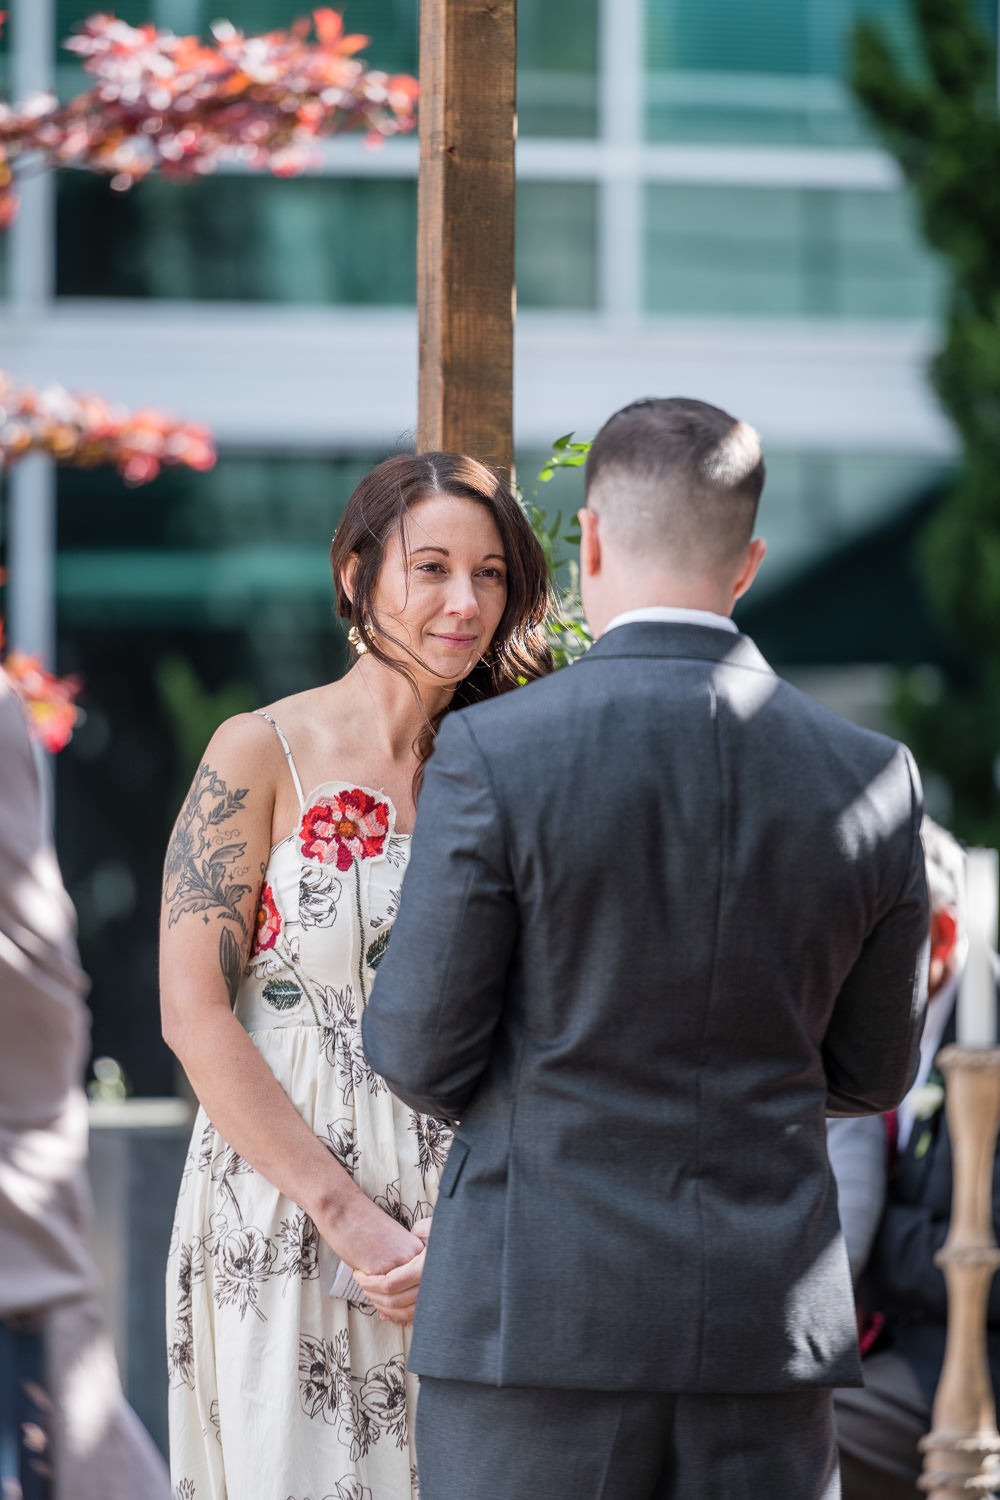 outdoor ceremony at surprise rooftop wedding in midtown atlanta